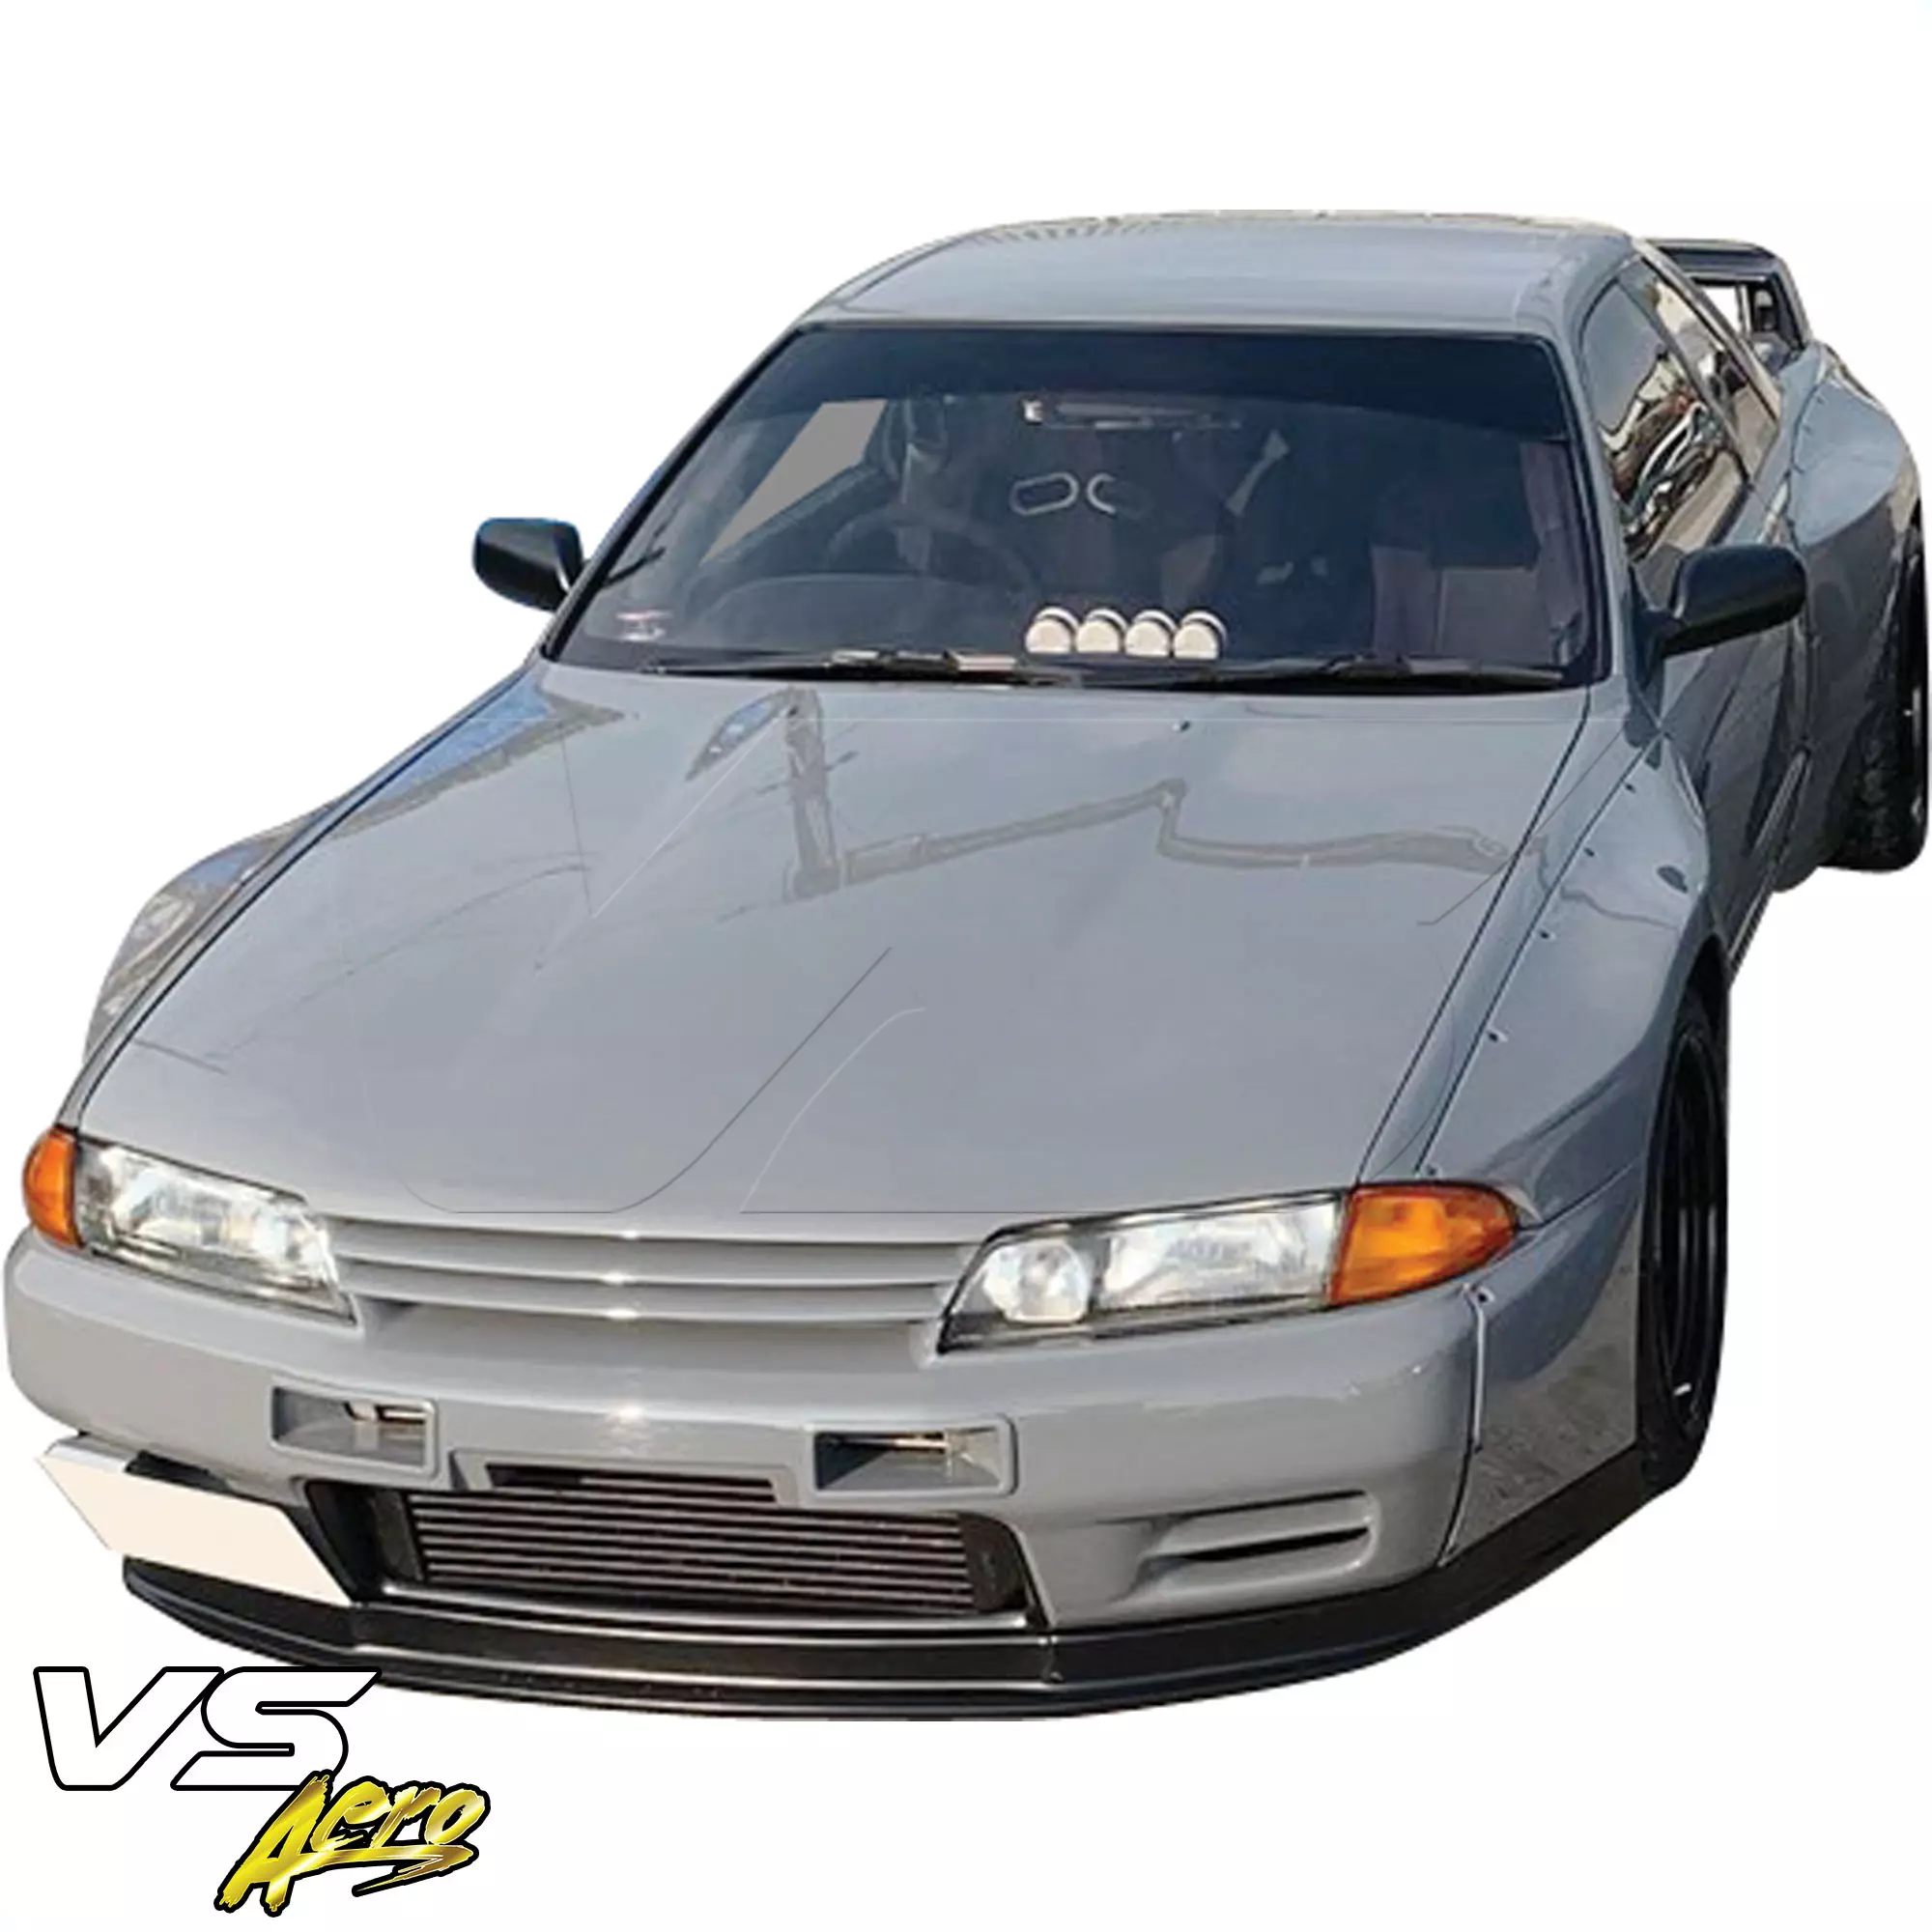 VSaero FRP TKYO Wide Body Kit > Nissan Skyline R32 1990-1994 > 2dr Coupe - Image 91